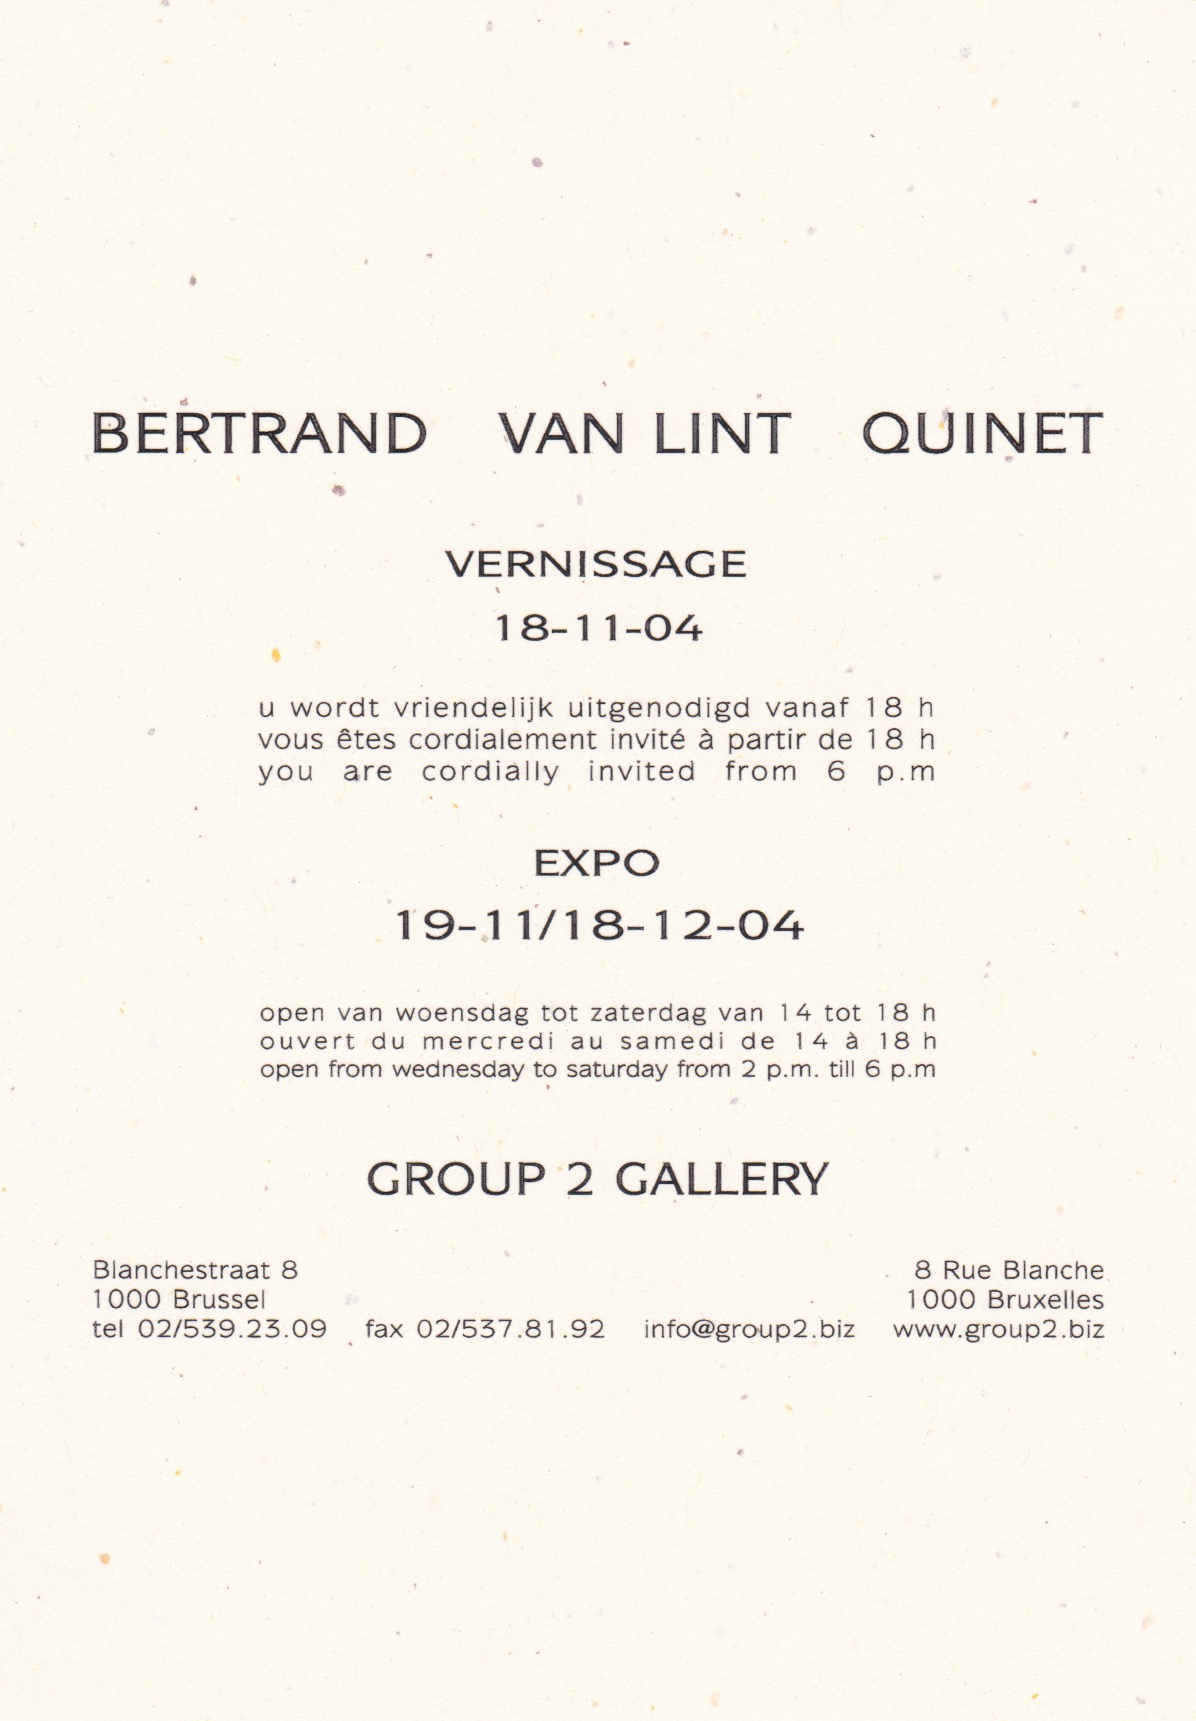 Bertrand Van Lint Quinet, Group 2 Gallery, Bruxelles, 2004